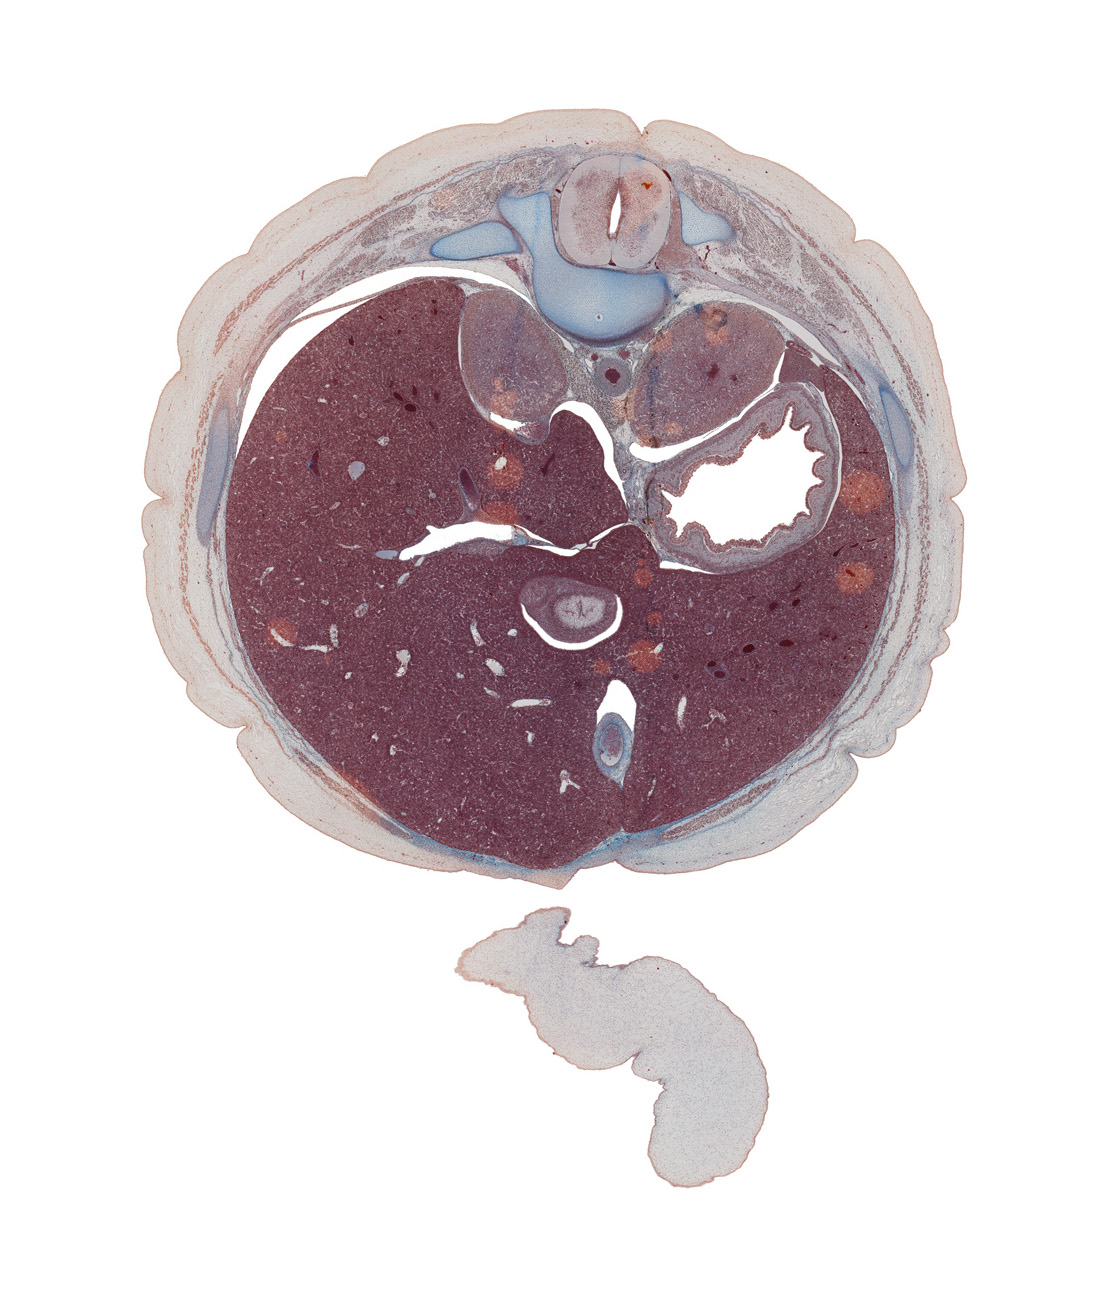 T-11 intercostal nerve, T-11 spinal ganglion, amnion, anterior wall of stomach, aorta, central canal, cephalic edge of umbilical cord, cephalic part of pyloric antrum of stomach, diaphragm, dorsal horn of grey matter, dorsal mesogastrium, ductus venosus, hepatic portal vein, inferior vena cava, internal abdominal oblique muscle, lateral horn of grey matter, left lobe of liver, mucoid connective tissue, peritoneal cavity, pleural recess, rib 11, right lobe of liver, suprarenal gland, transversus abdominis muscle, ventral horn of grey matter